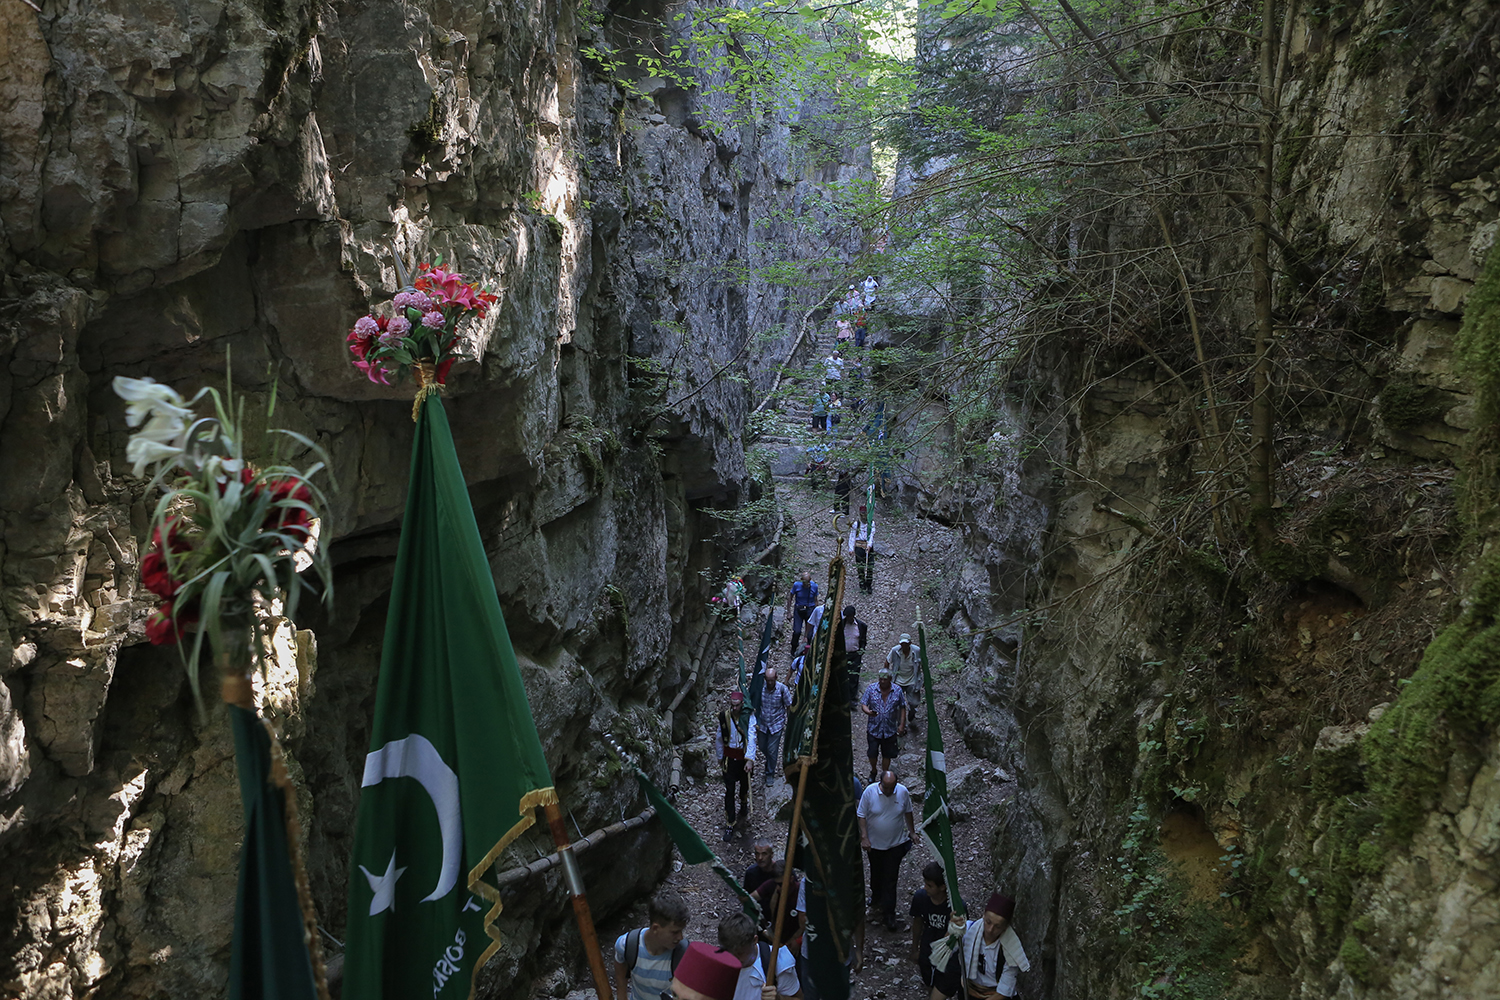 Pilgrims move through the rocky wooded chasm (photo: Konstantin Novakovic)